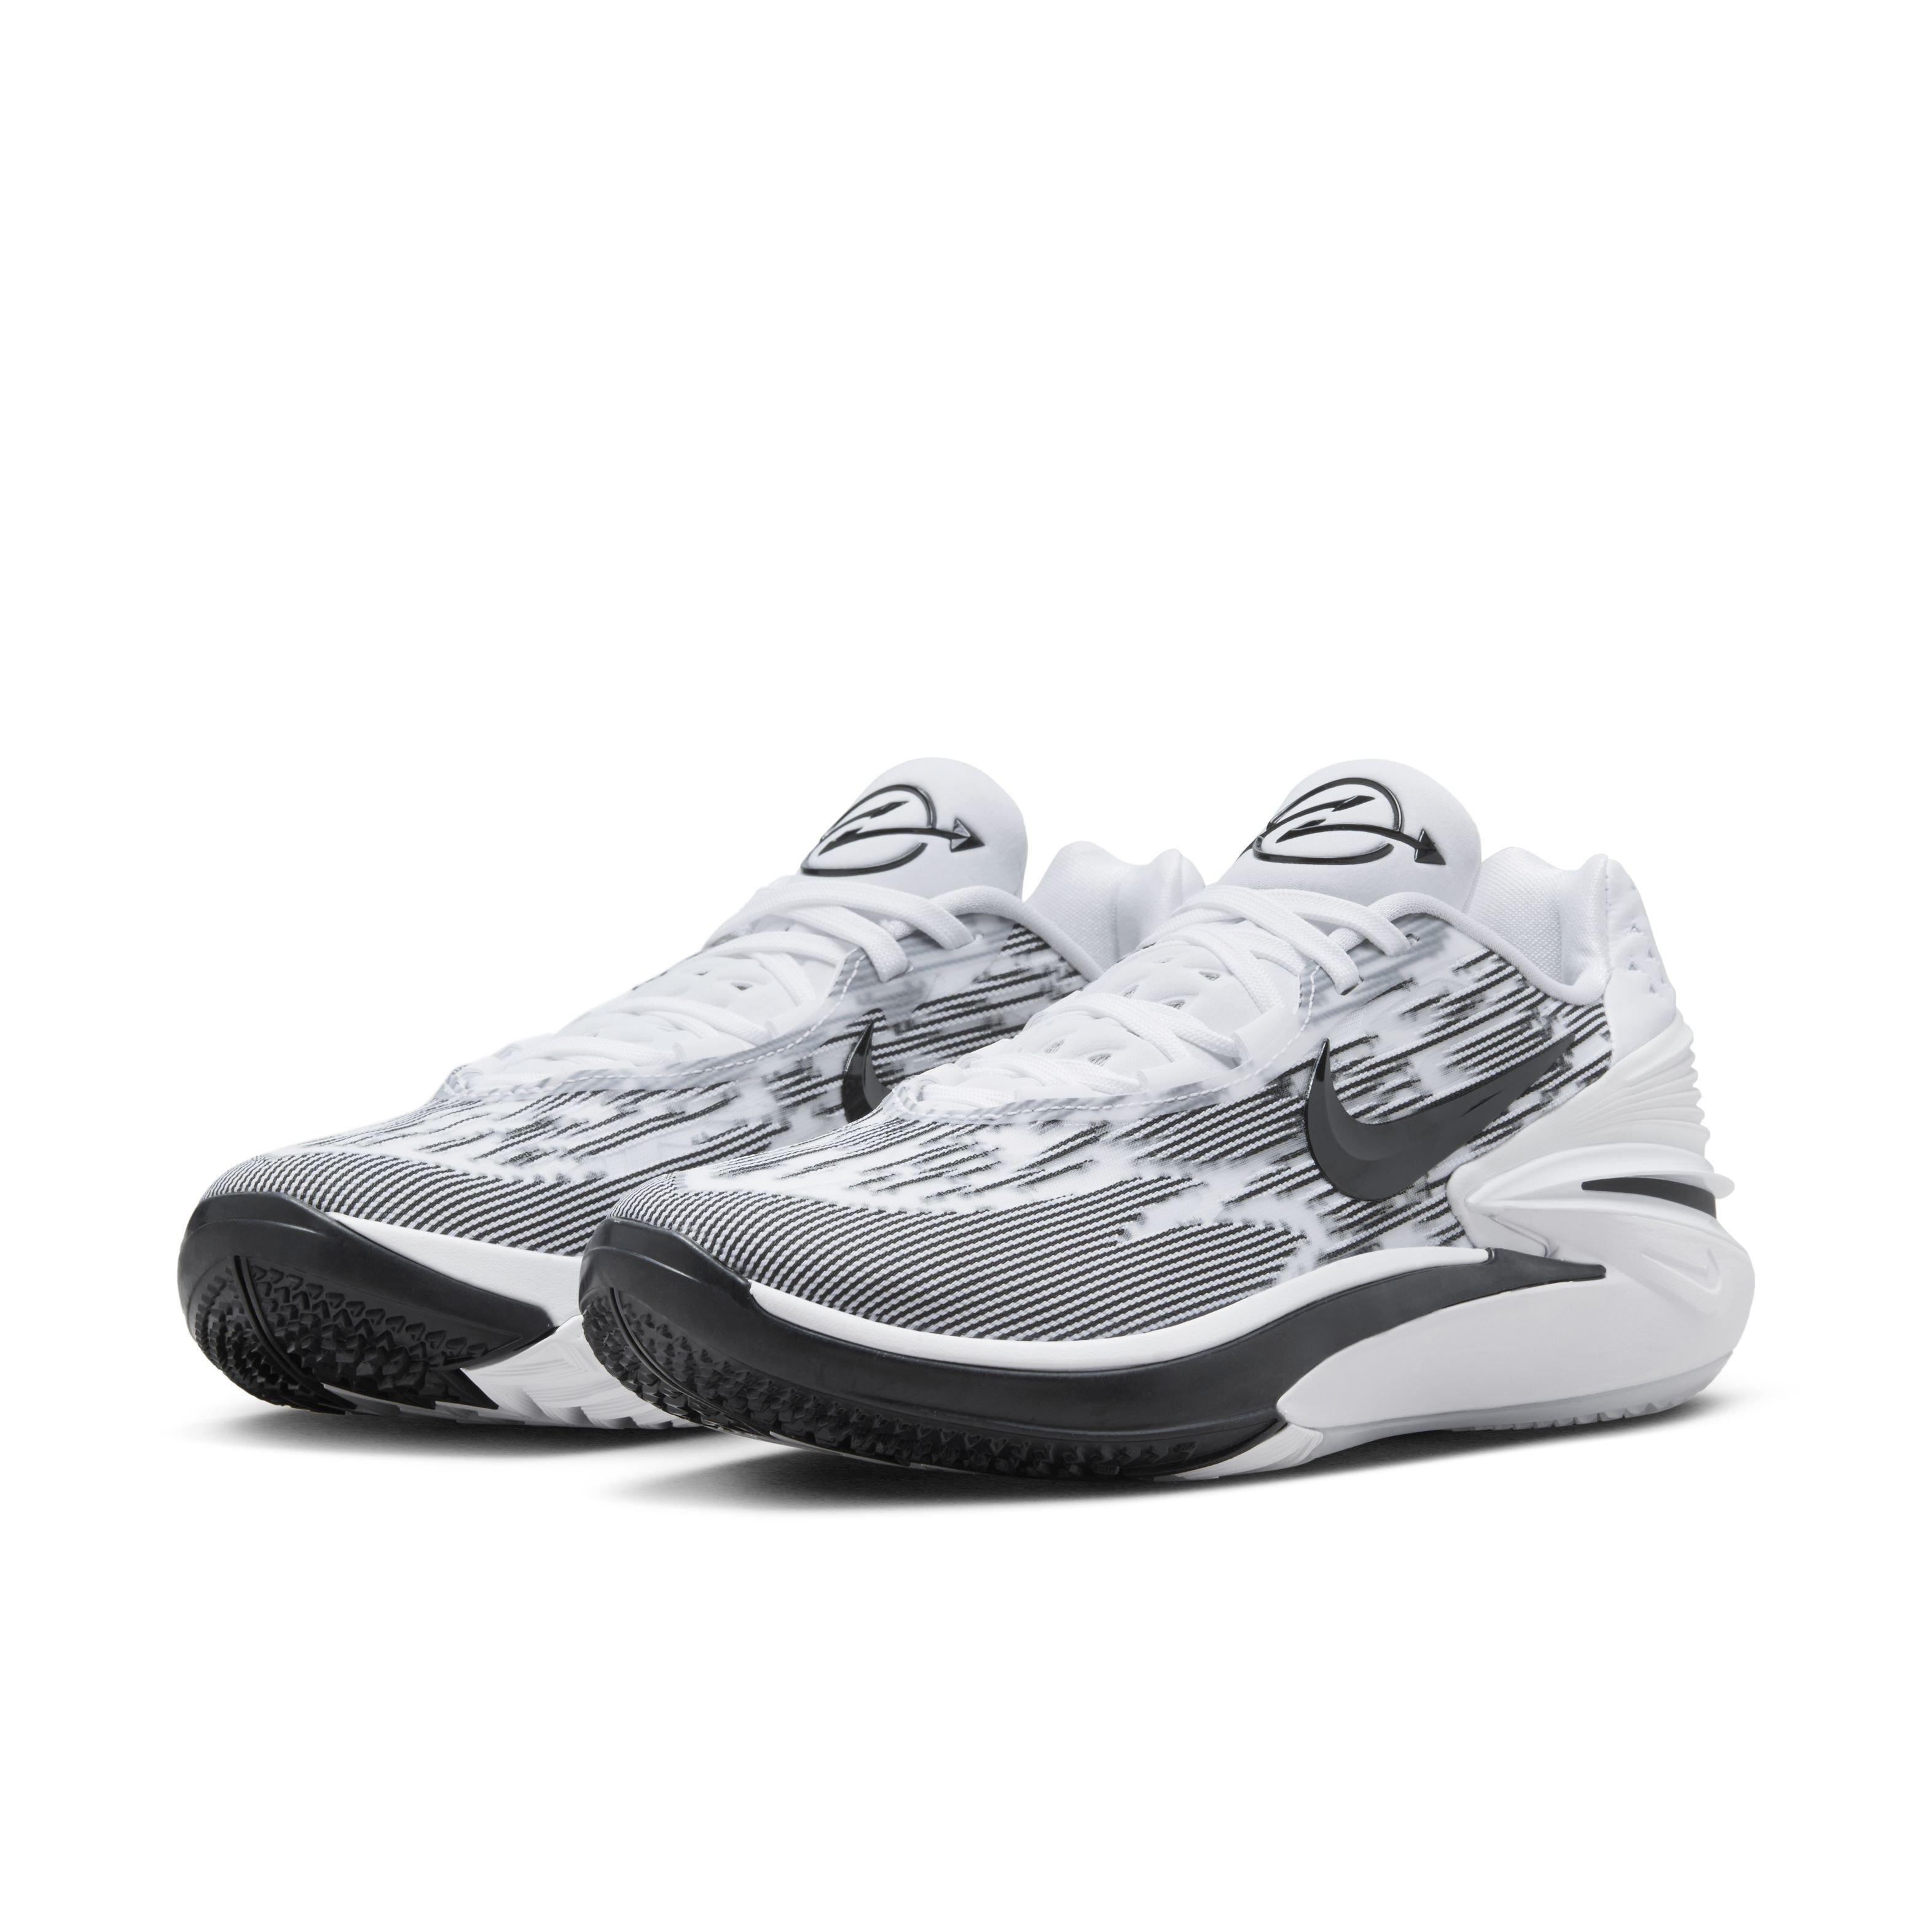 Nike G.T. Cut 2 (Team) Men's Basketball Shoes